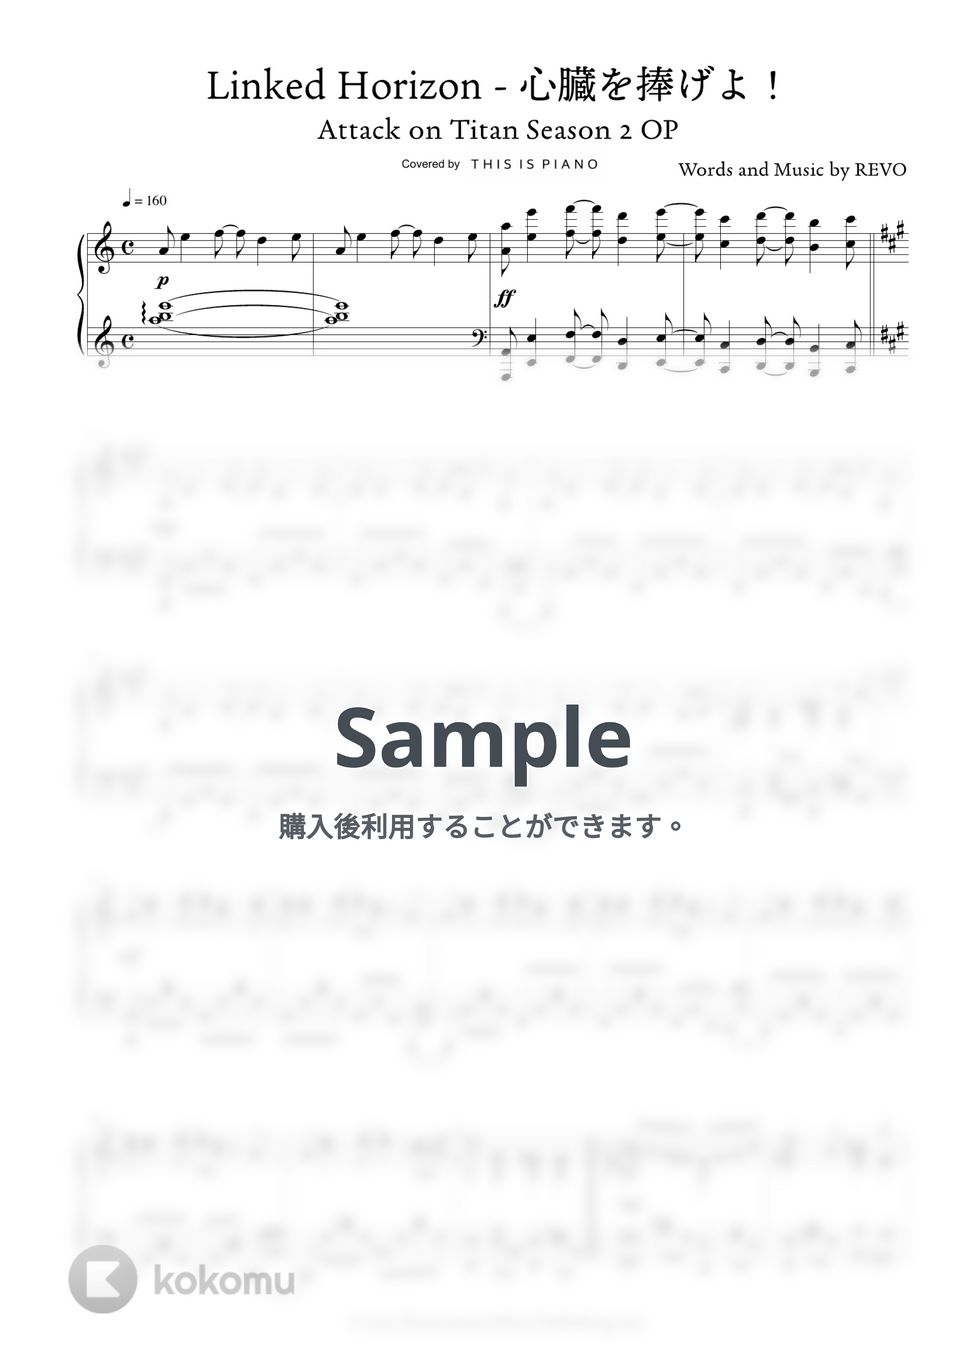 Linked Horizon - 心臓を捧げよ! (進撃の巨人 Season 2 OP) by THIS IS PIANO